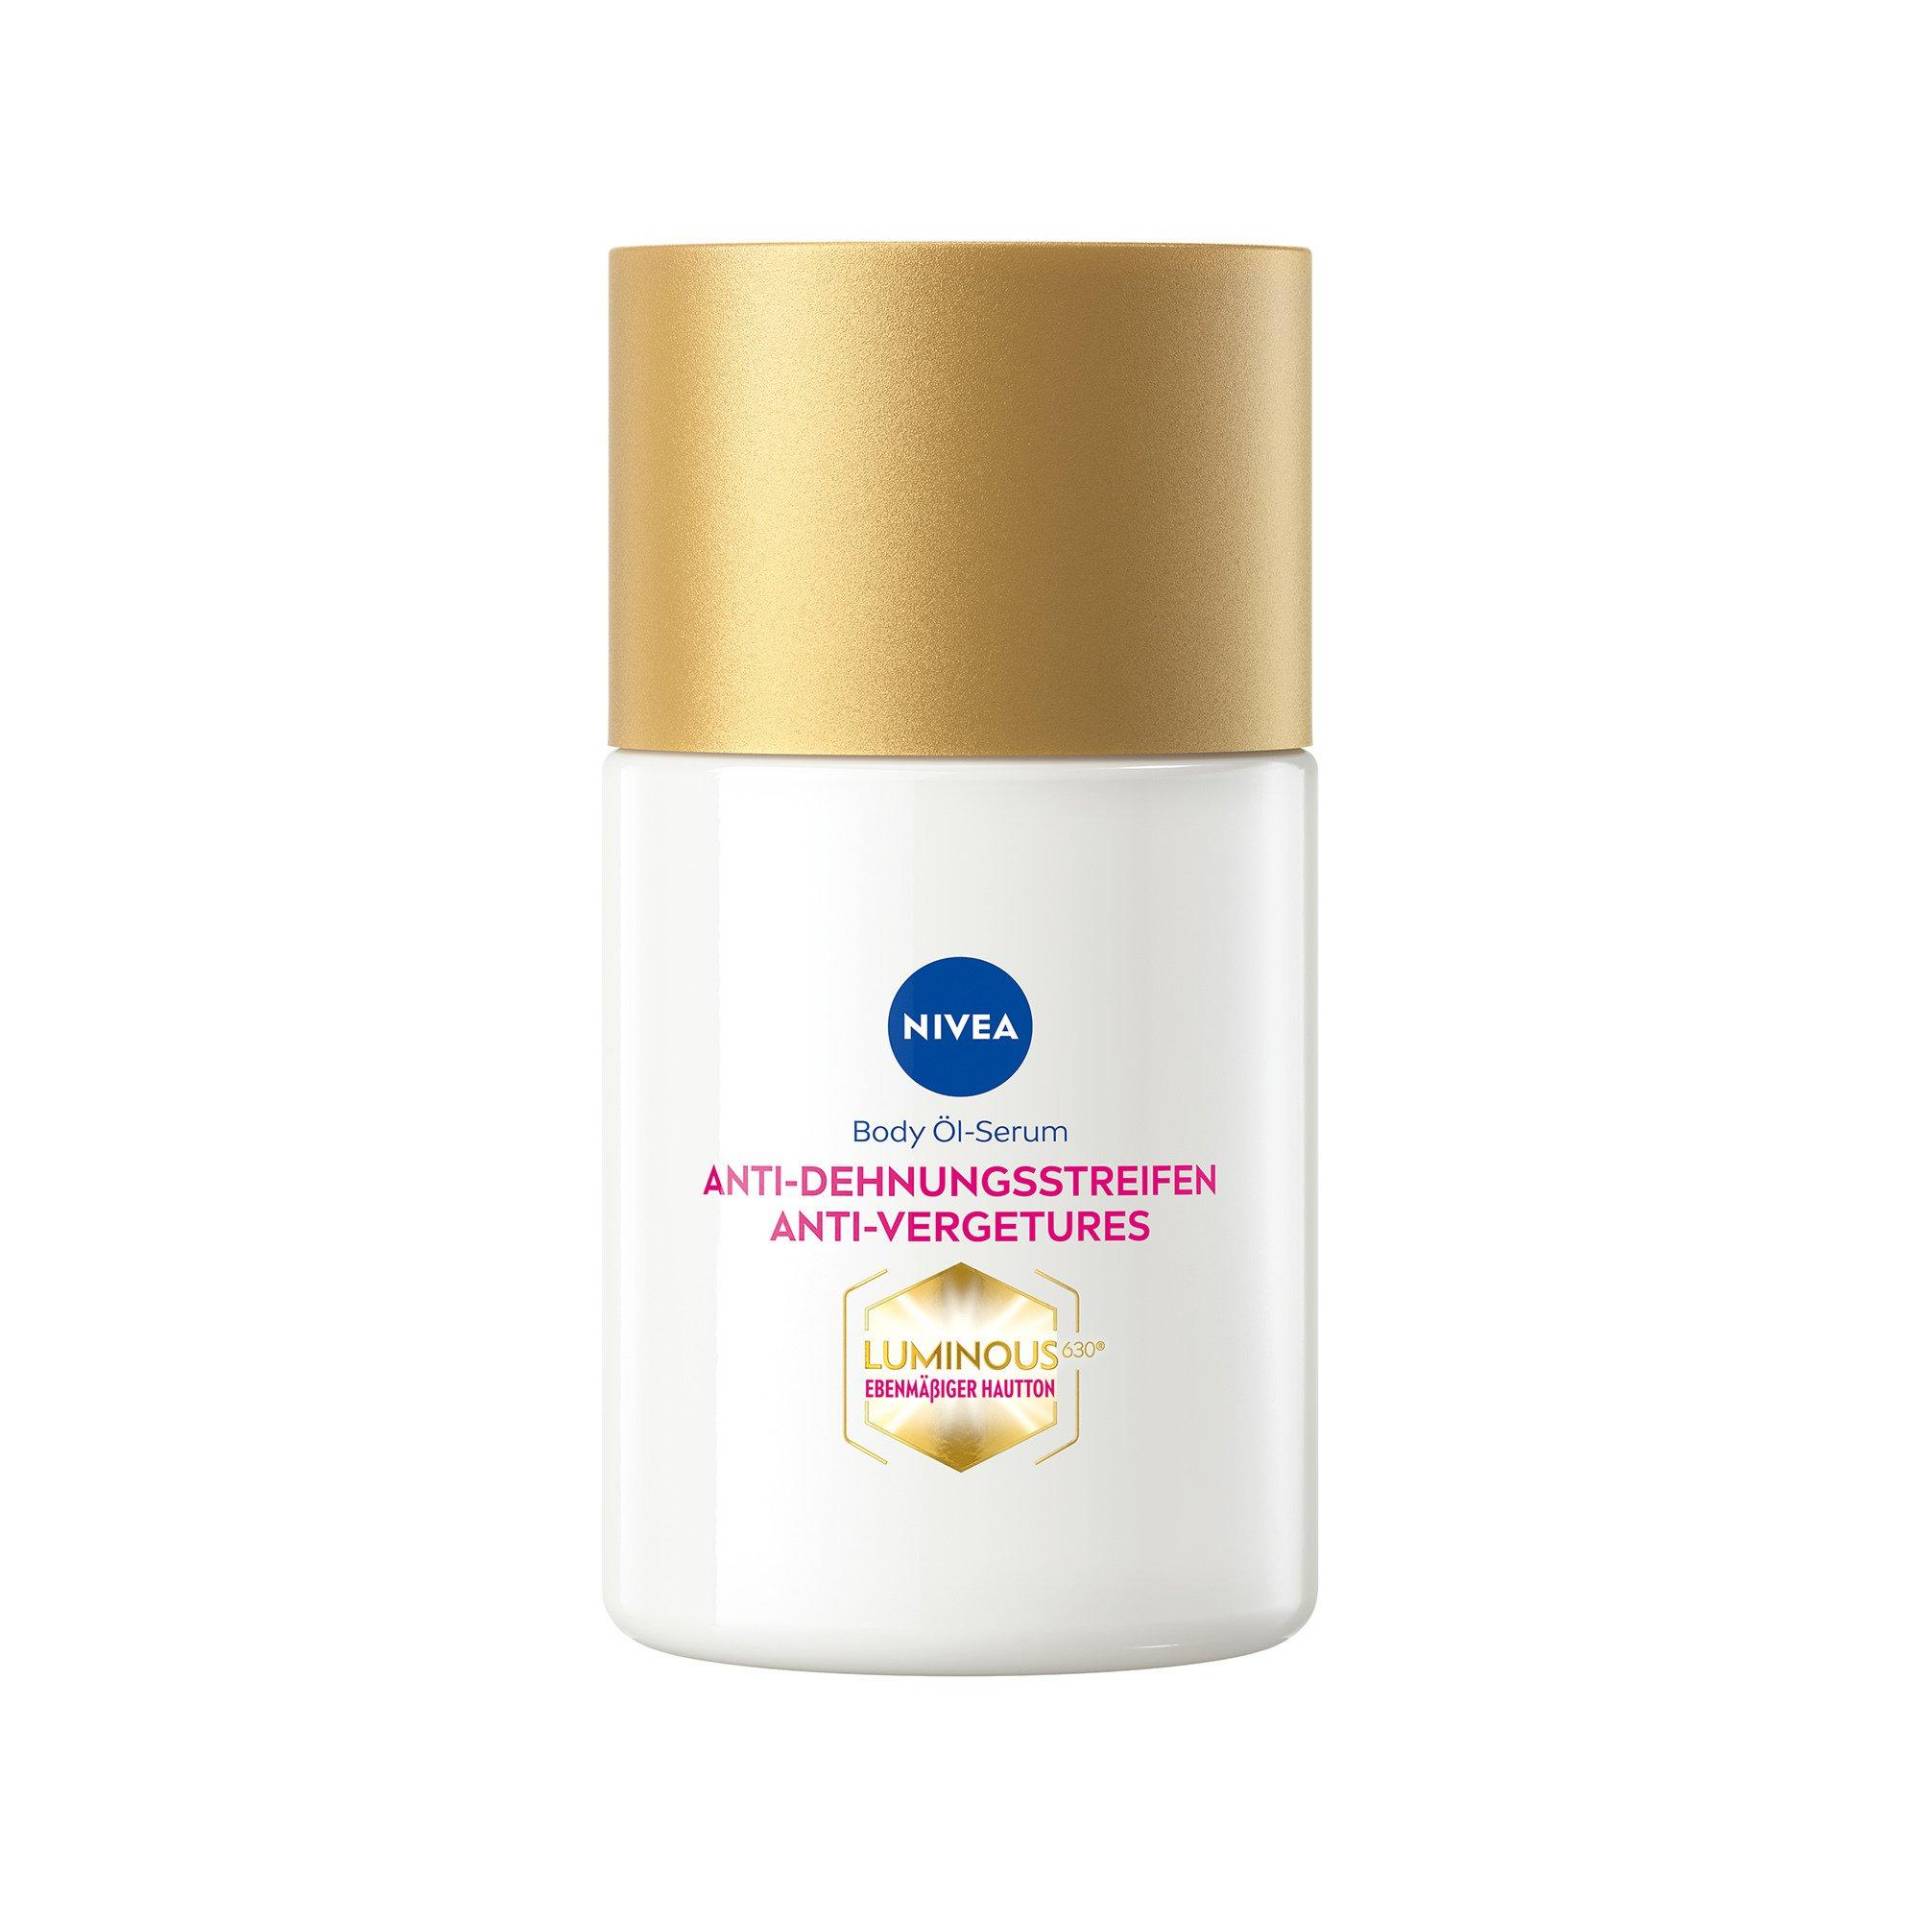 Body Luminous Body Öl-serum Anti-dehnungsstreifen Damen  100 ml von NIVEA